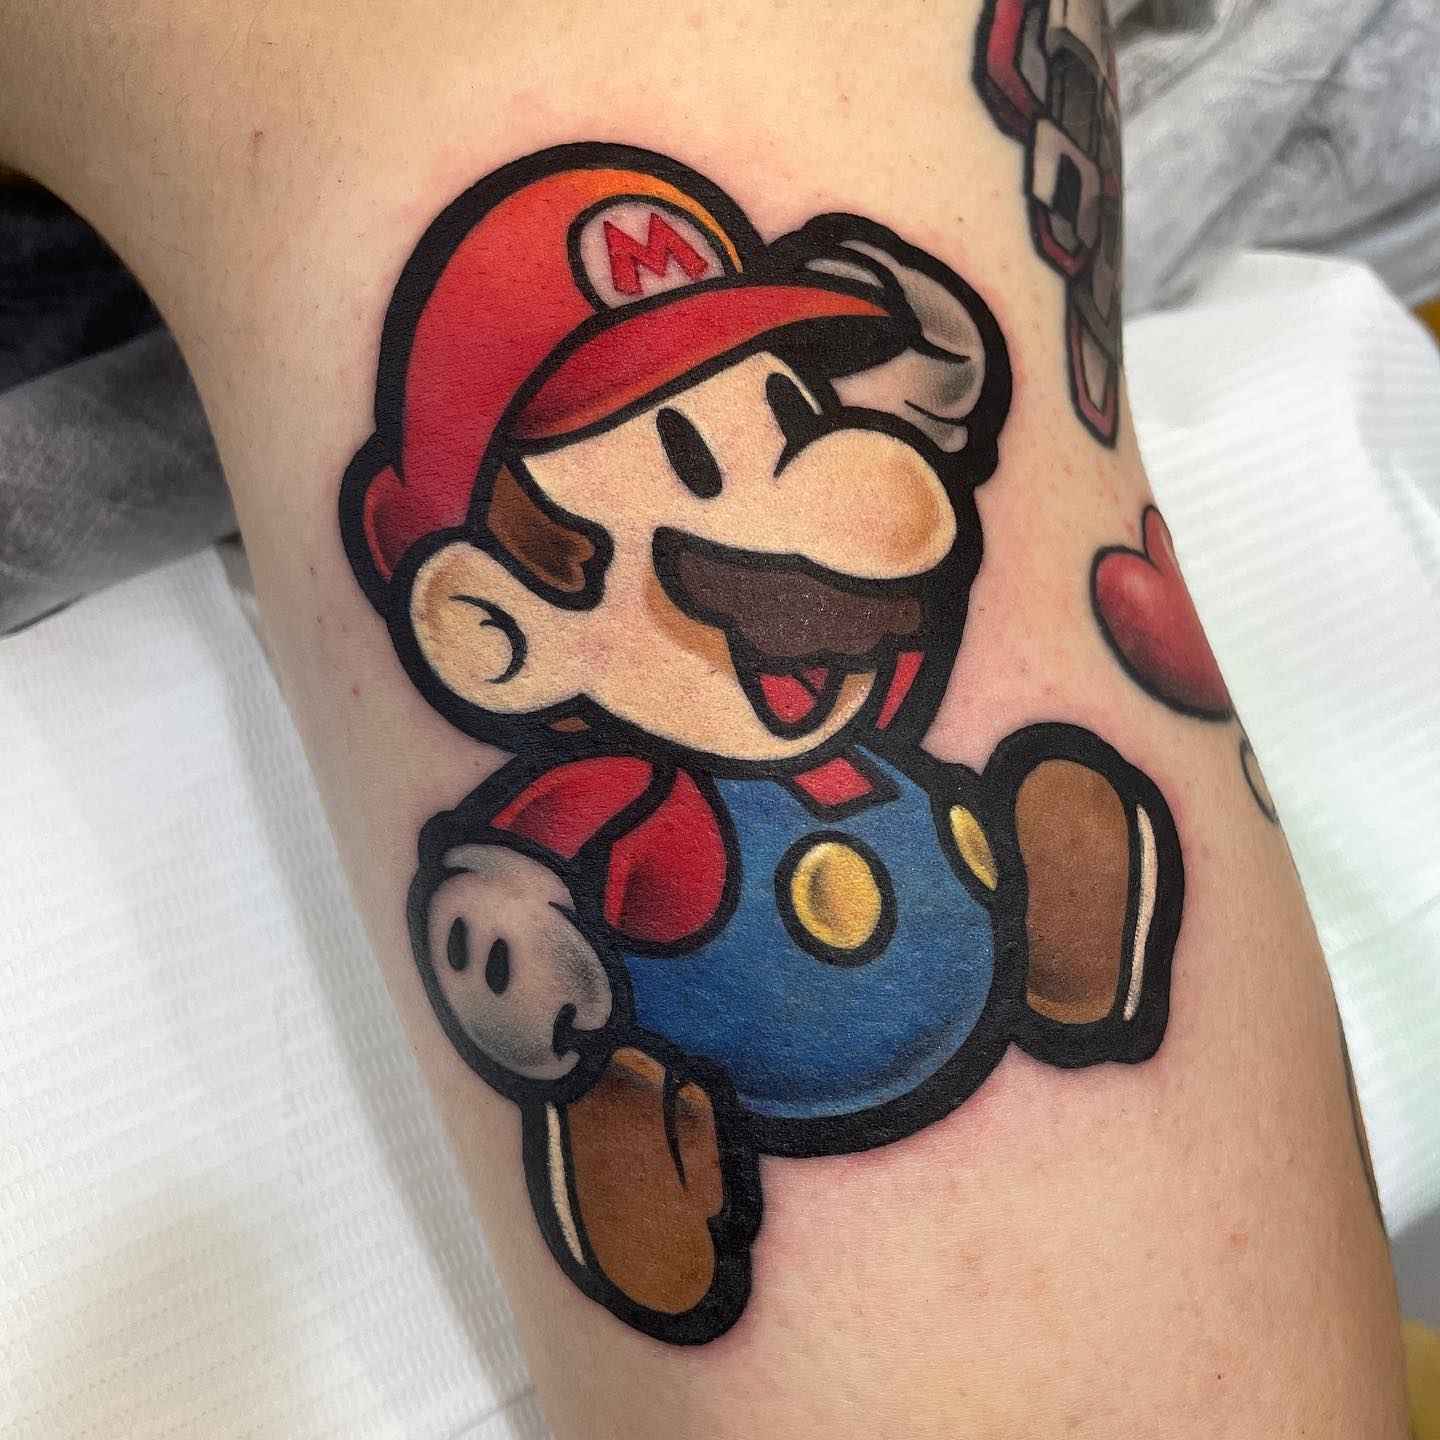 Mario tattoo ideas by stefansalamone